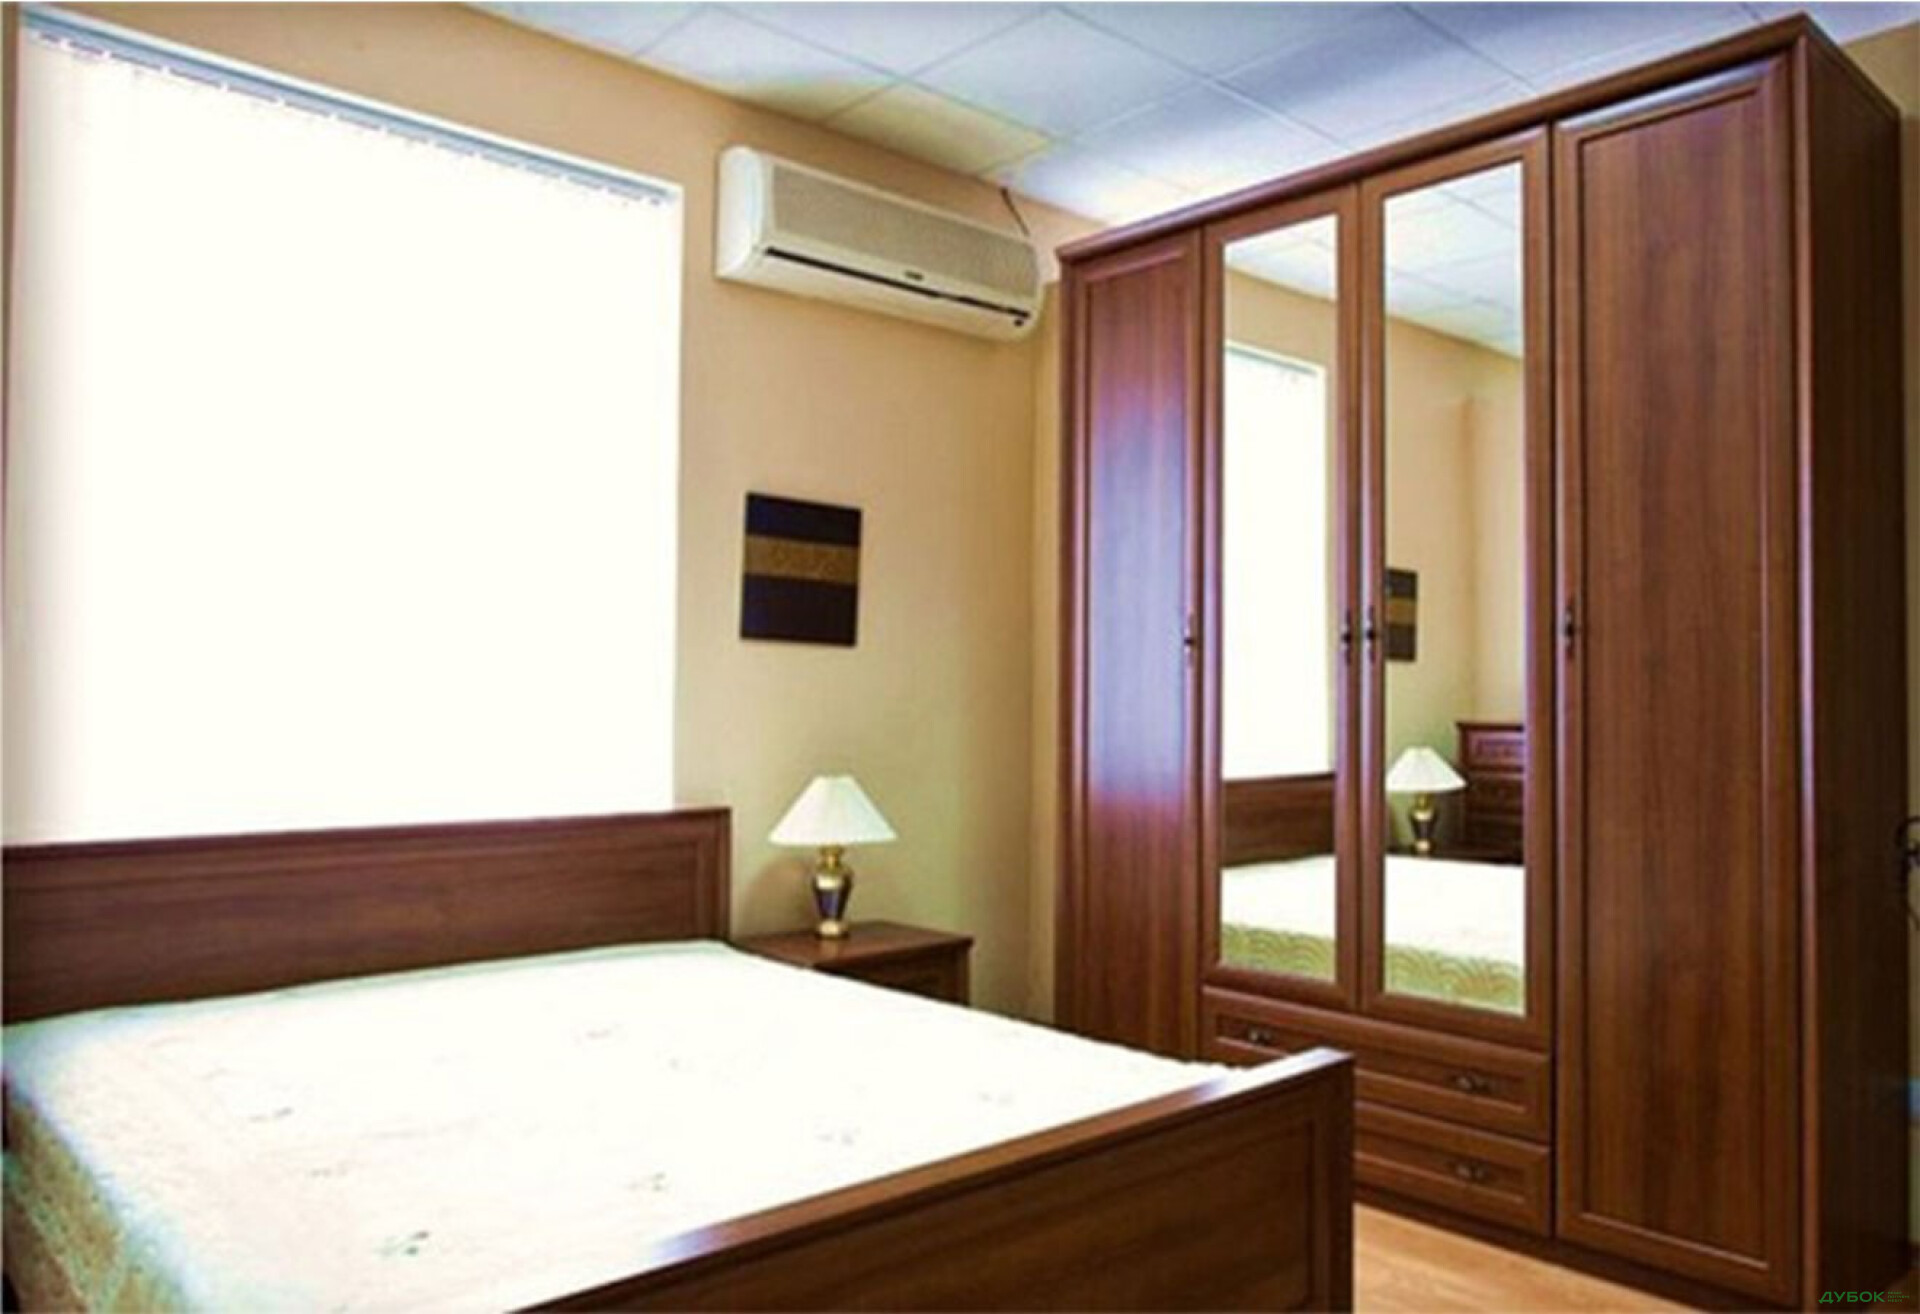 Фото 3 - Модульная спальня Джоконда ВМВ Холдинг